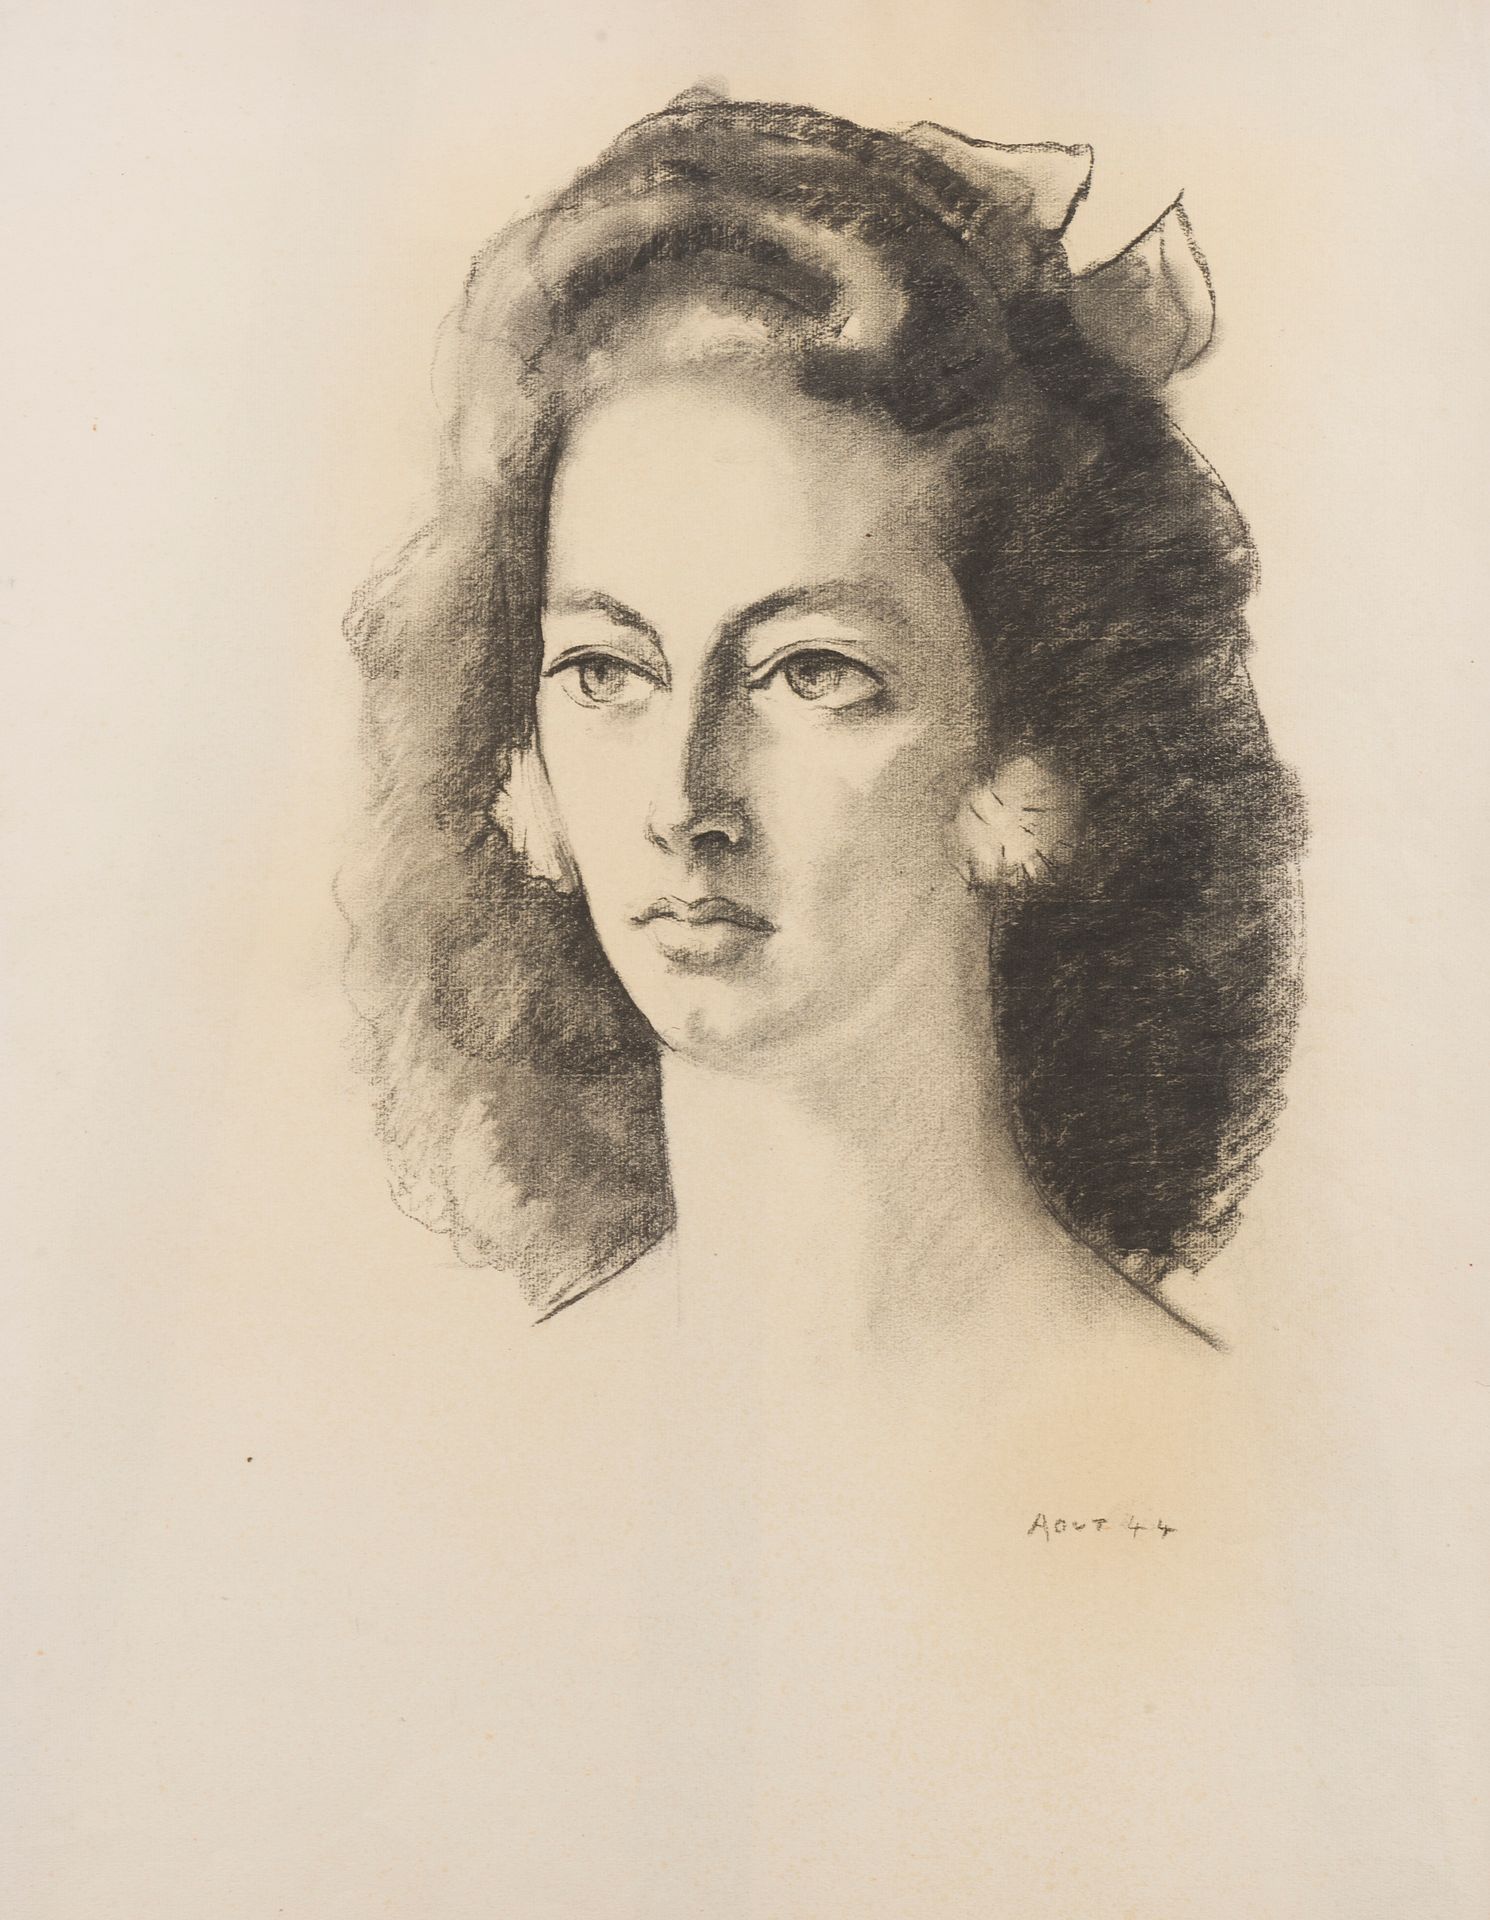 Null 查尔斯-皮卡特-勒杜(1881-1959)
皮库，8月44日
炭笔，右下角有日期
63 x 48 cm